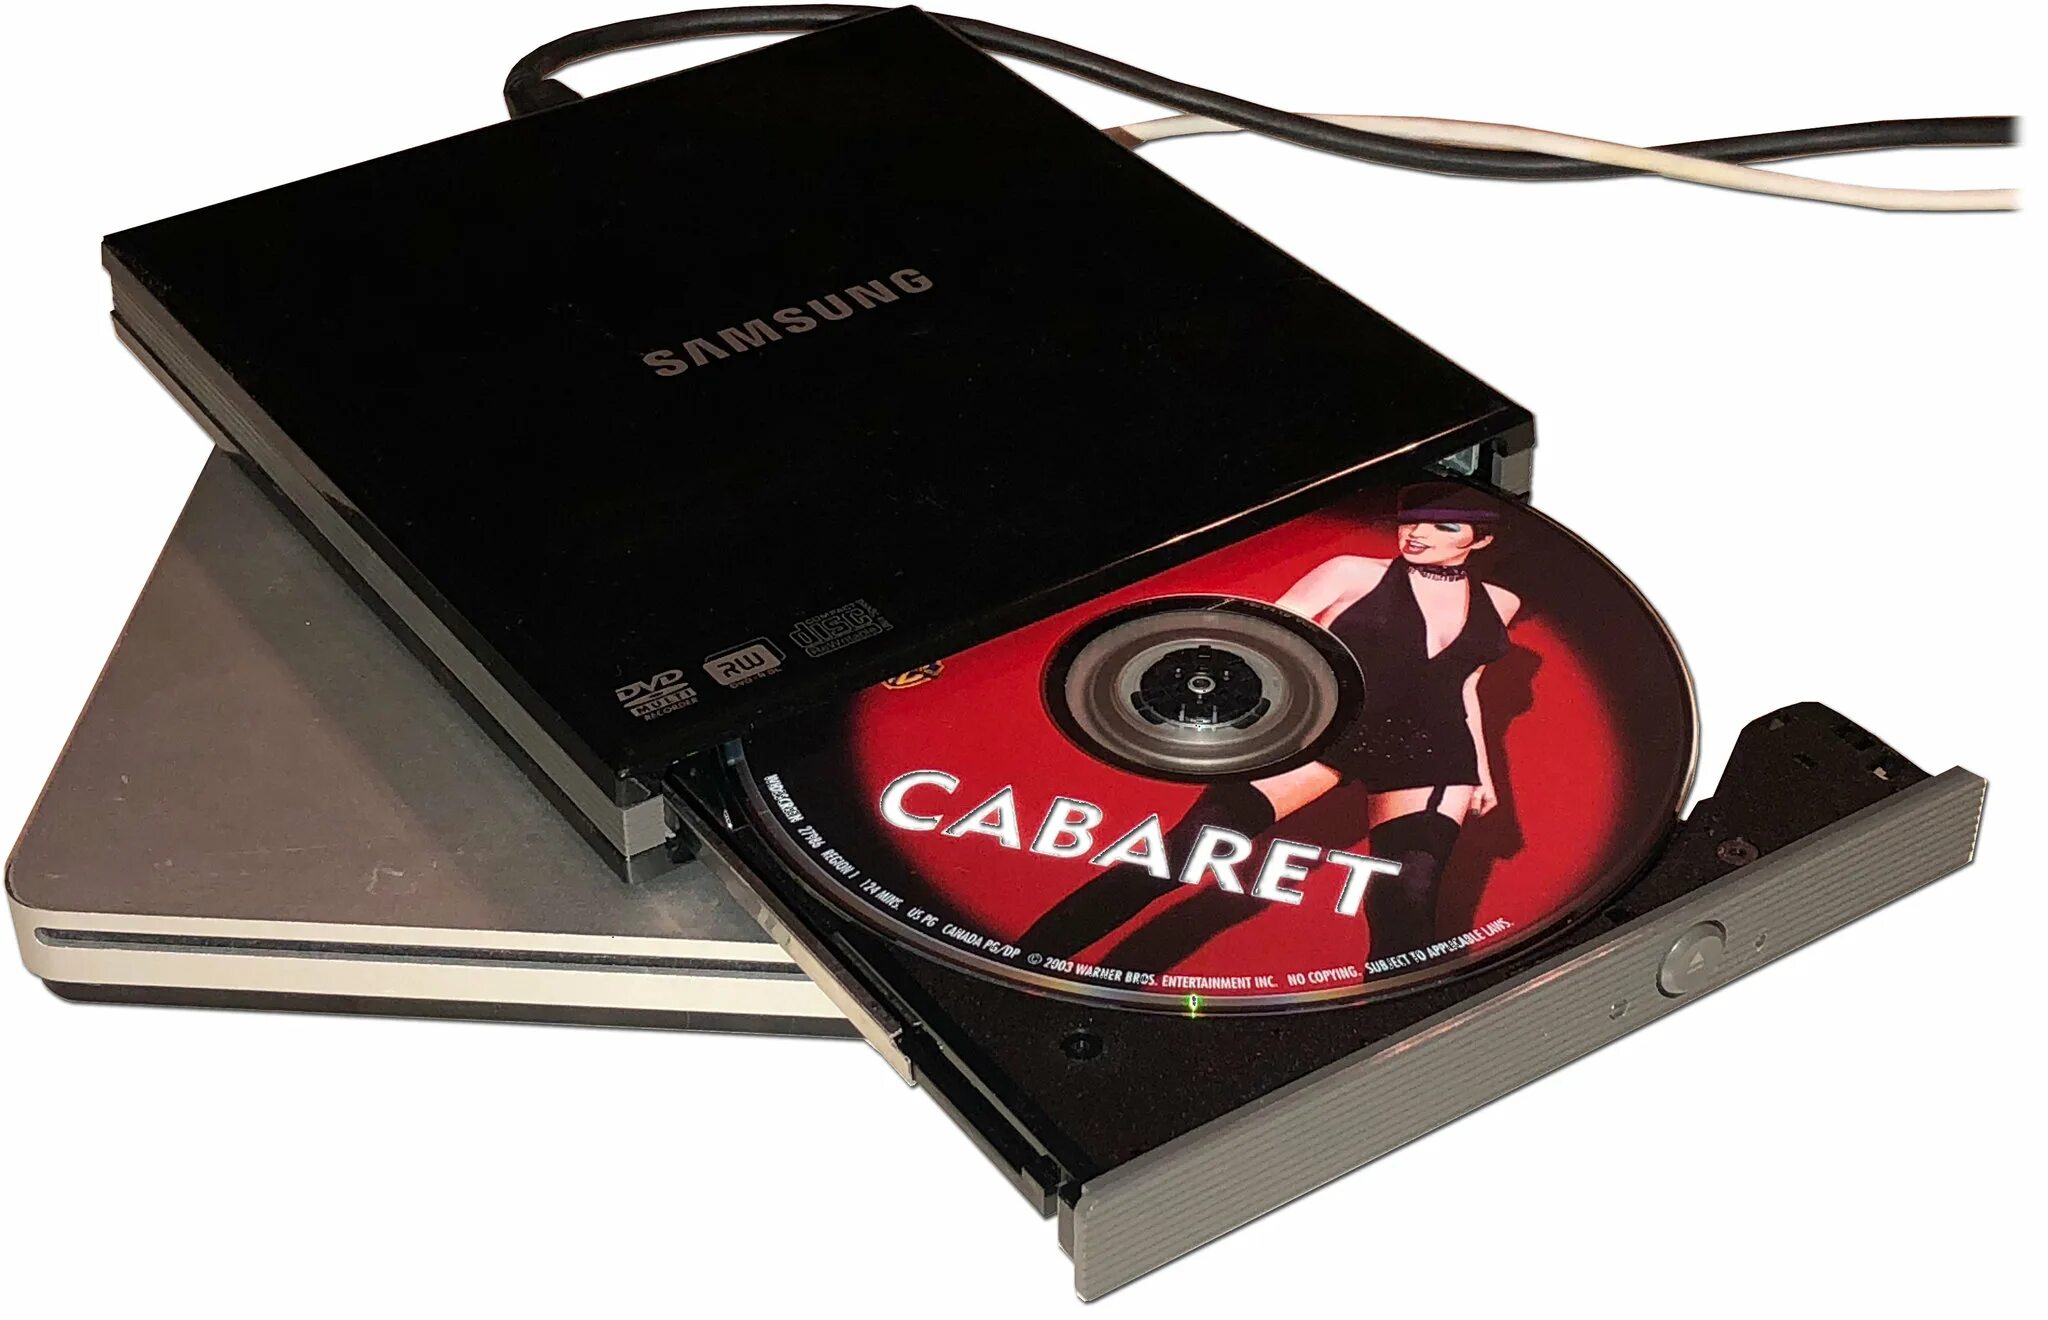 Cds драйвер. Mini DVD Drive. CD DVD Mini DVD Disk. DVD ноутбук. Внешний оптический привод.